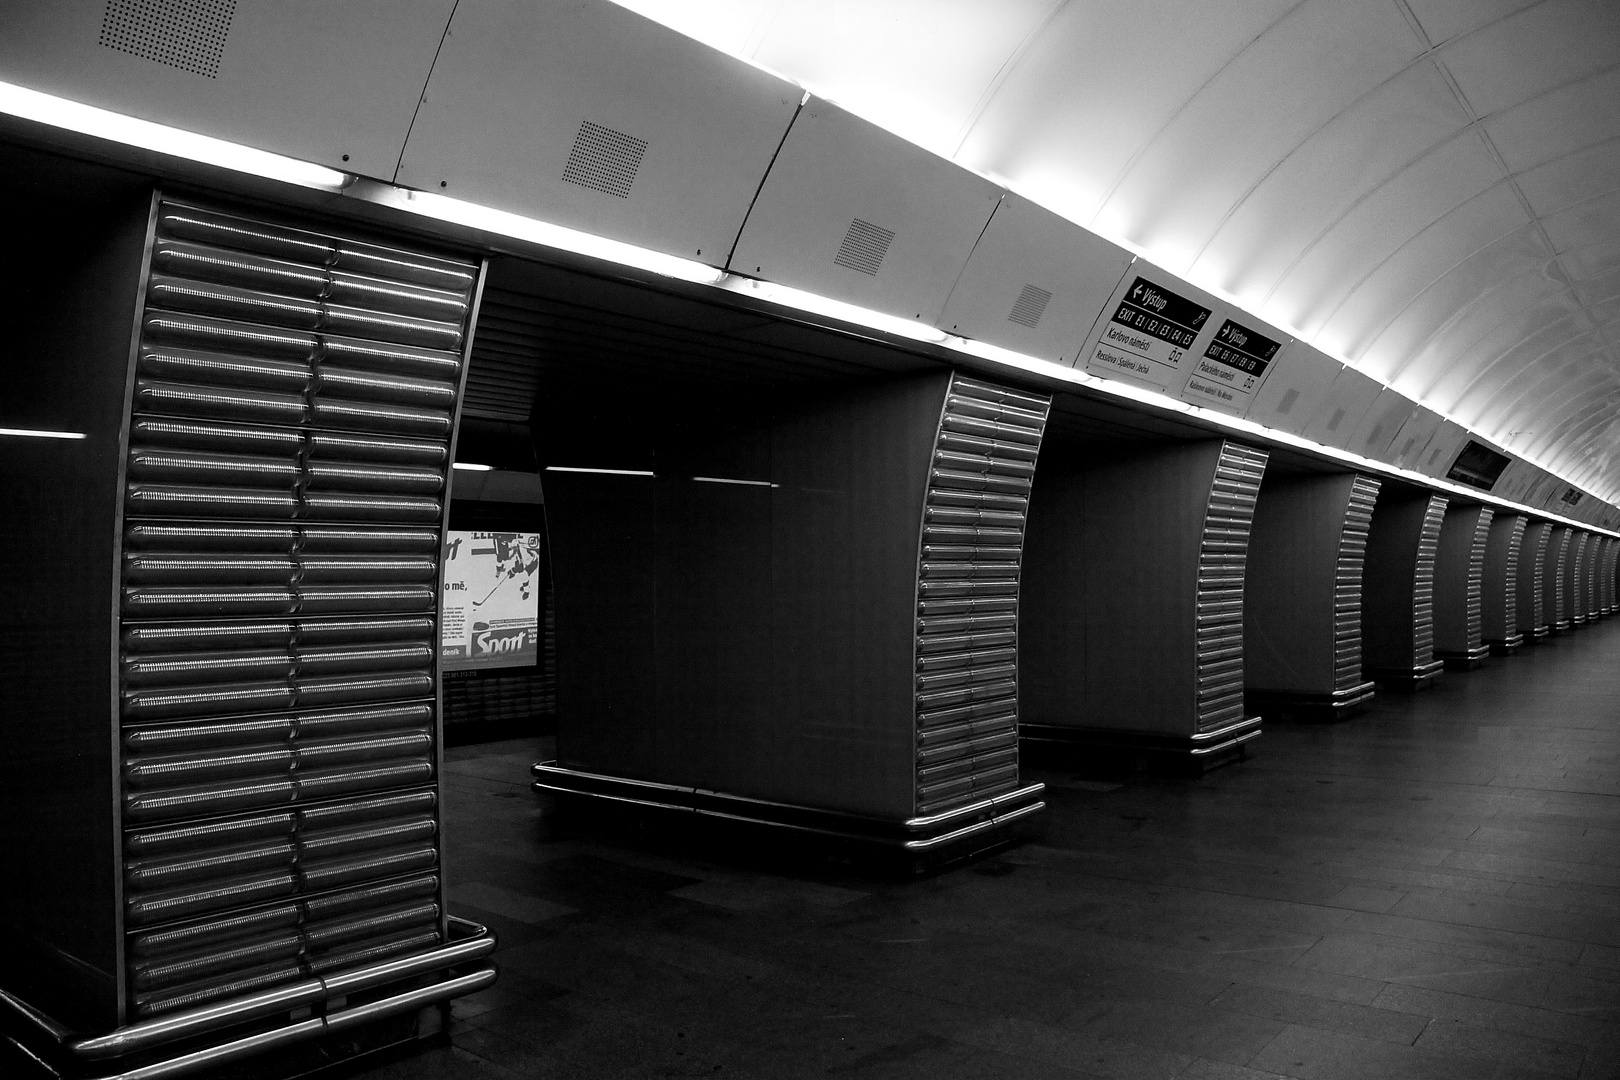 U-Bahnstation